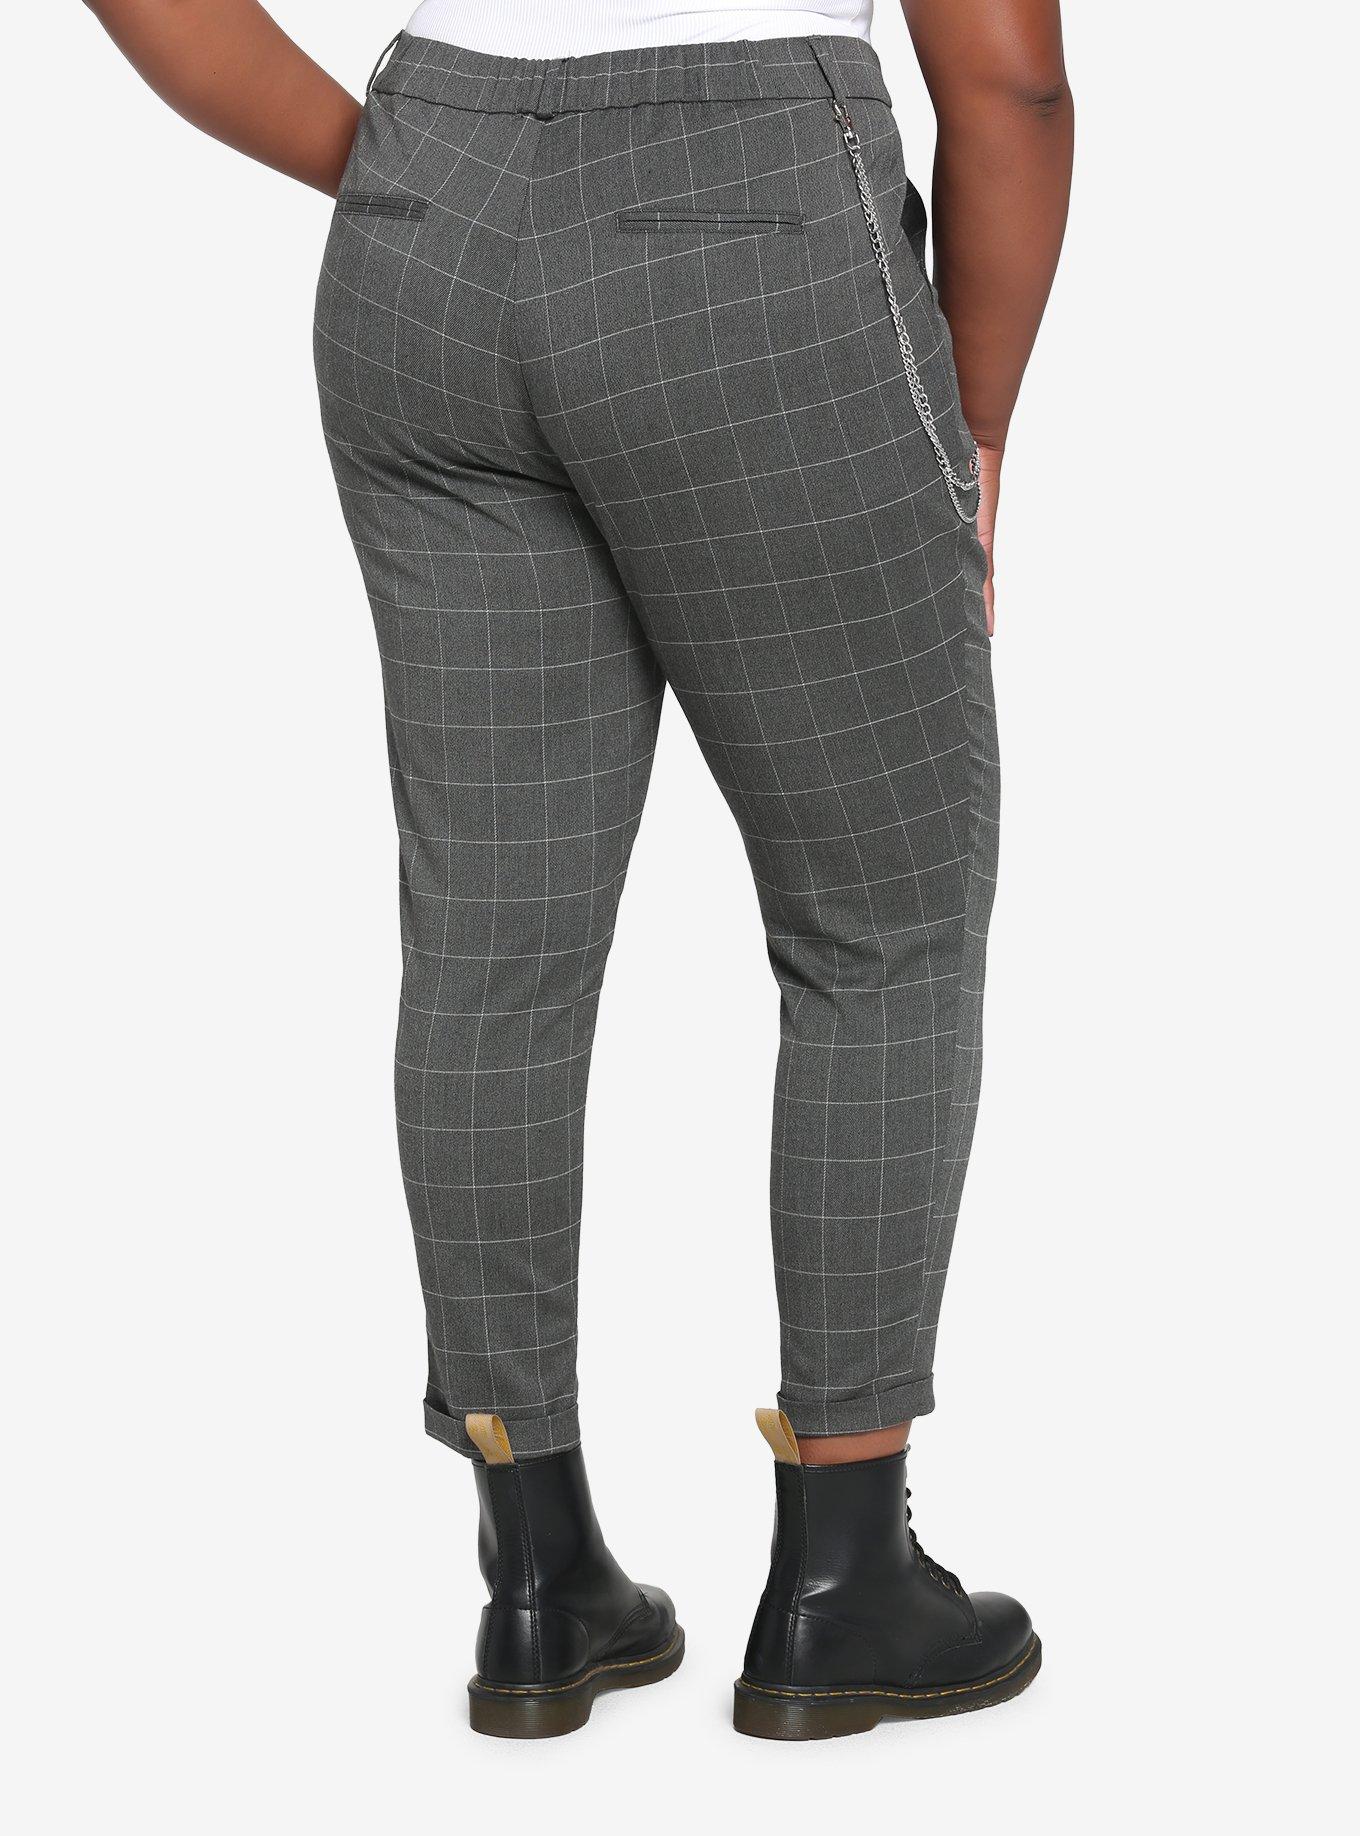 Grey Grid Side Chain Pants Plus Size, GREY, alternate